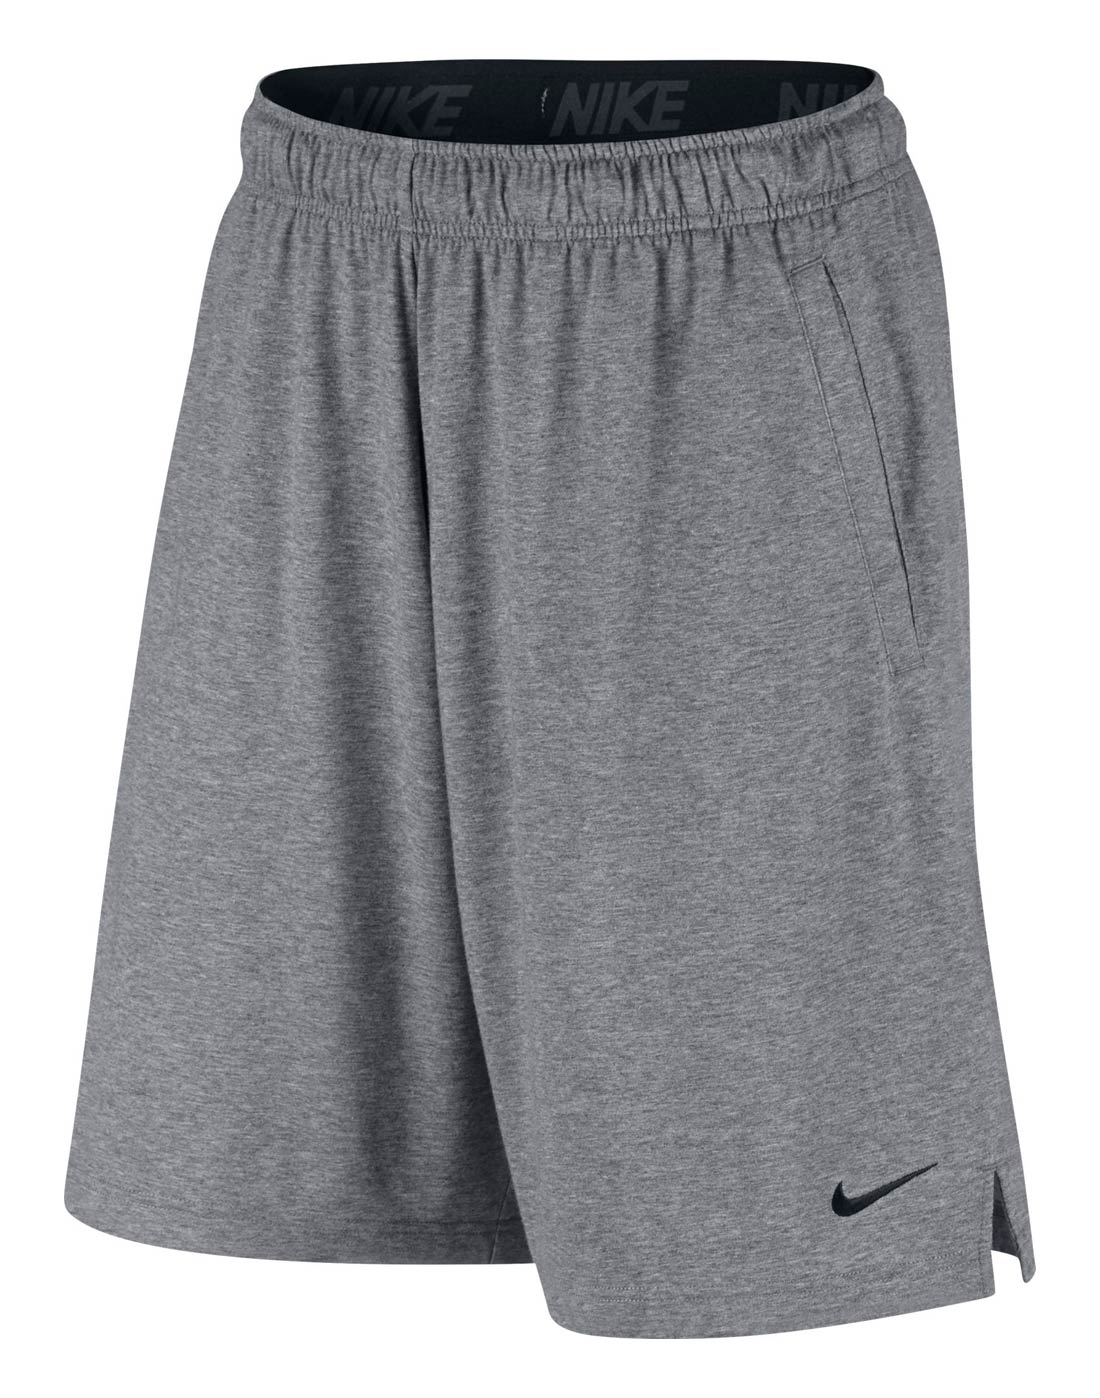 Nike Mens Dri-Fit Cotton Short - Grey | Life Style Sports UK